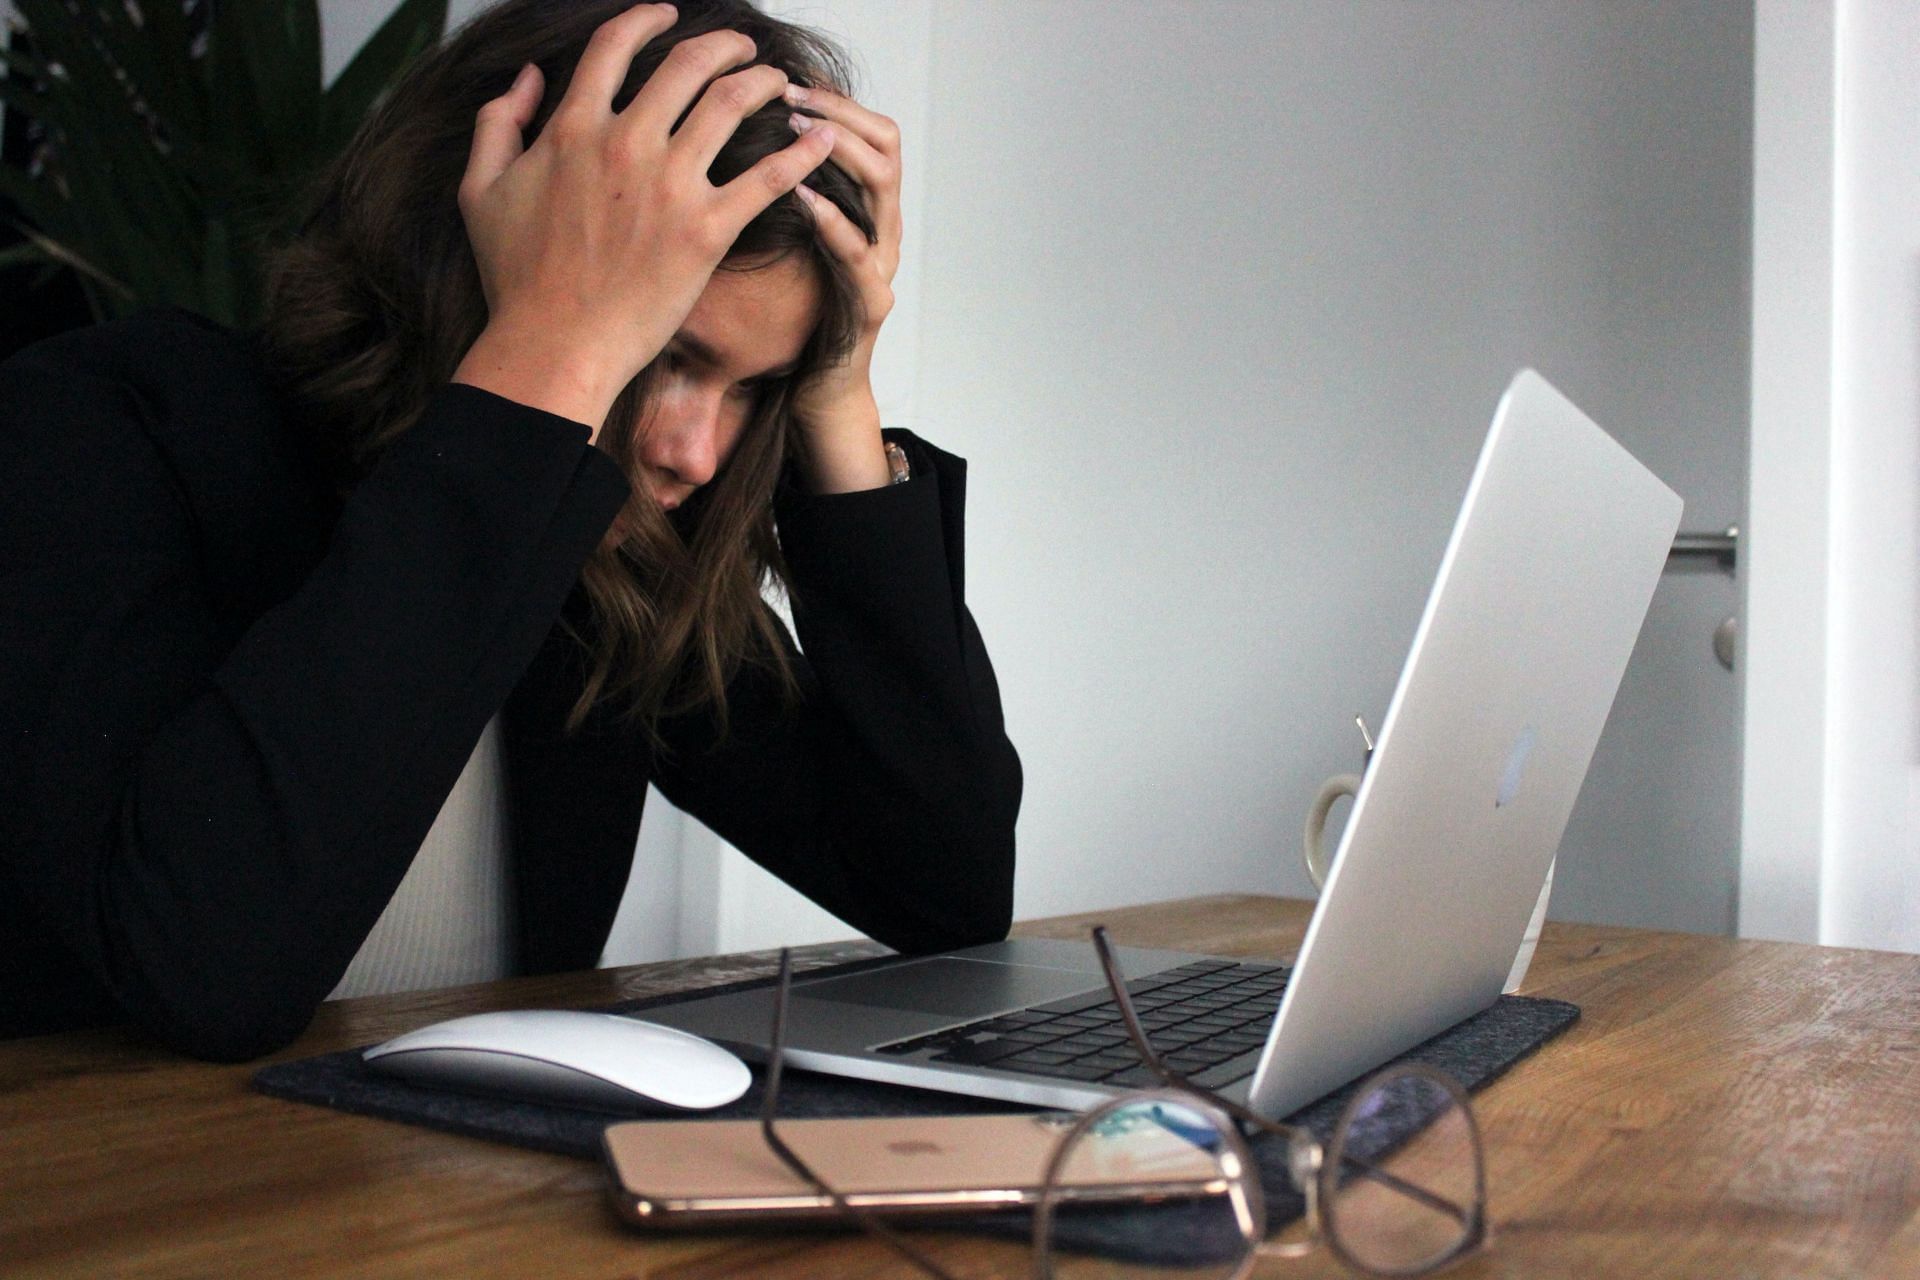 Fatigue is associated with the symptoms of PCOS. (Image via Unsplash/Elisa Venture)